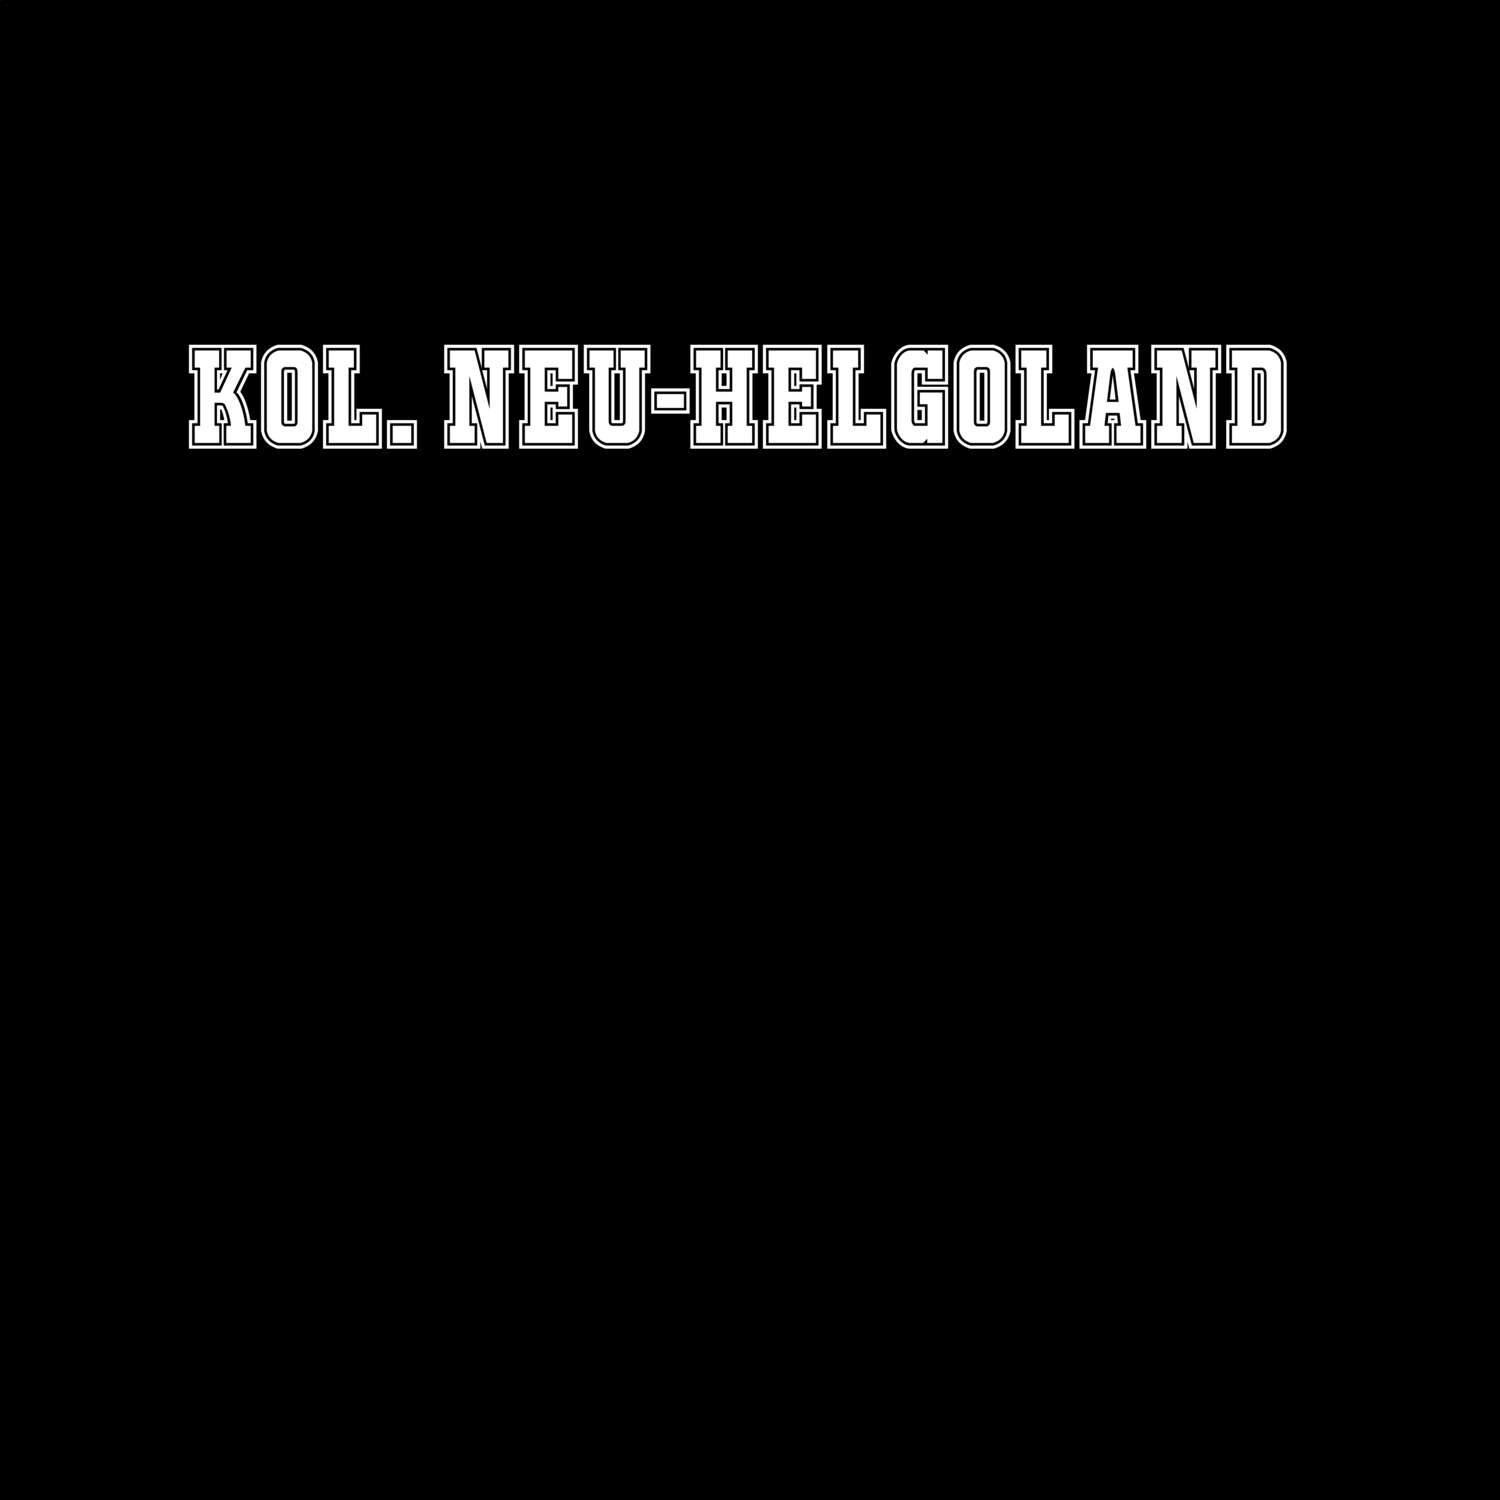 Kol. Neu-Helgoland T-Shirt »Classic«